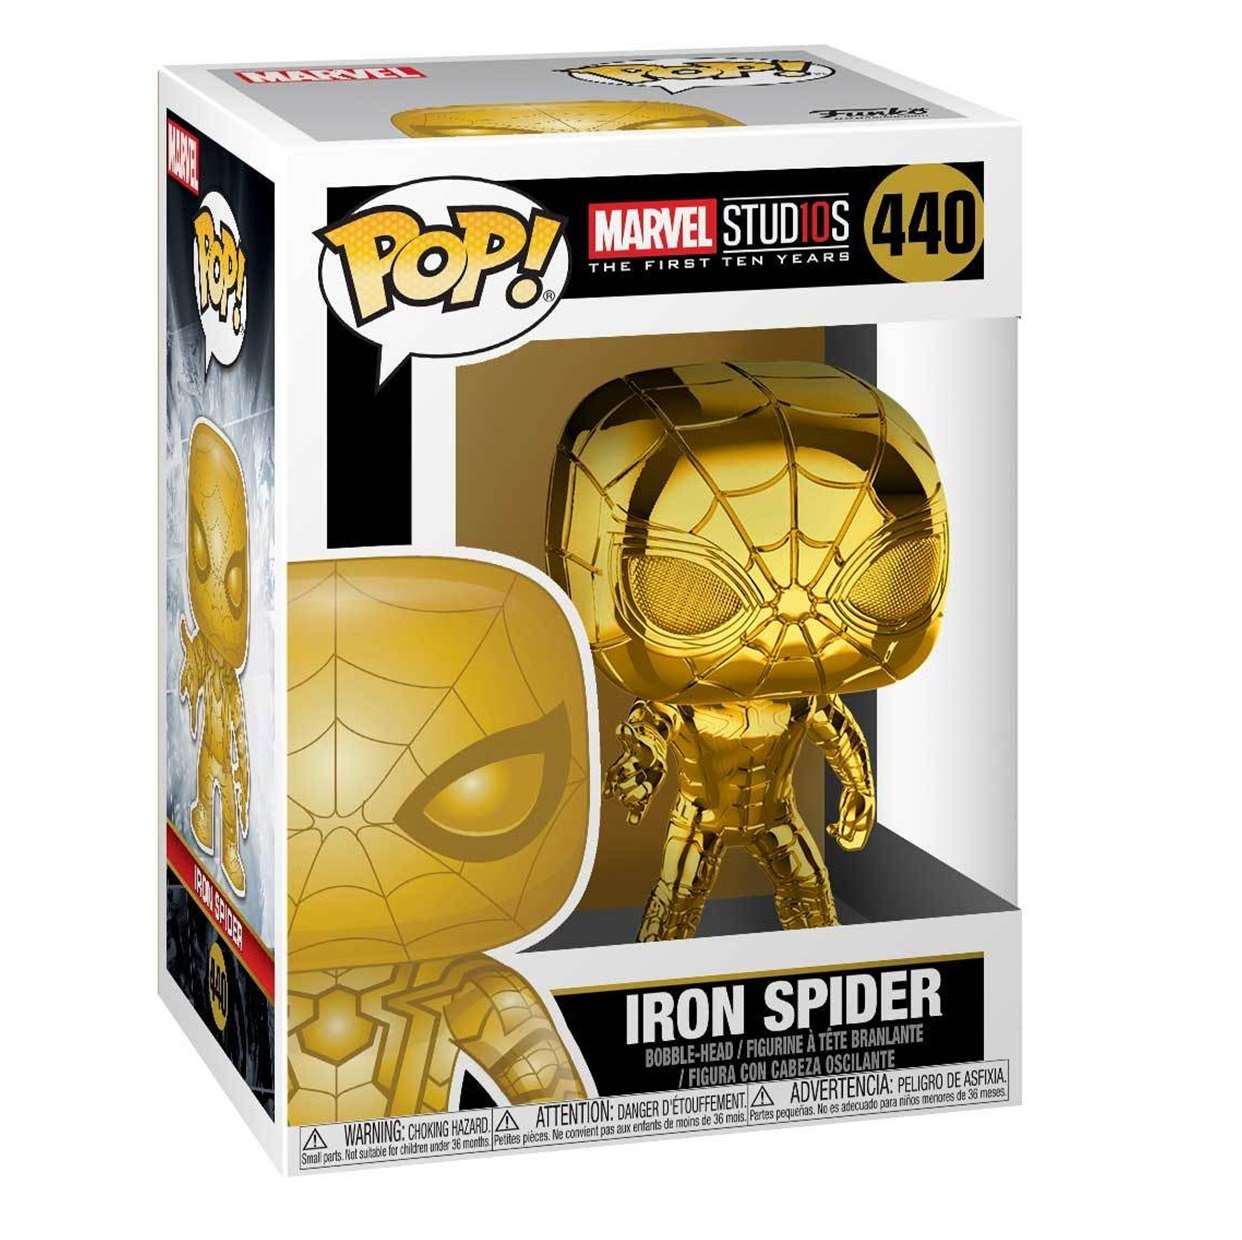 Iron Spider #440 Figura Marvel Studios 10th Funko Pop!